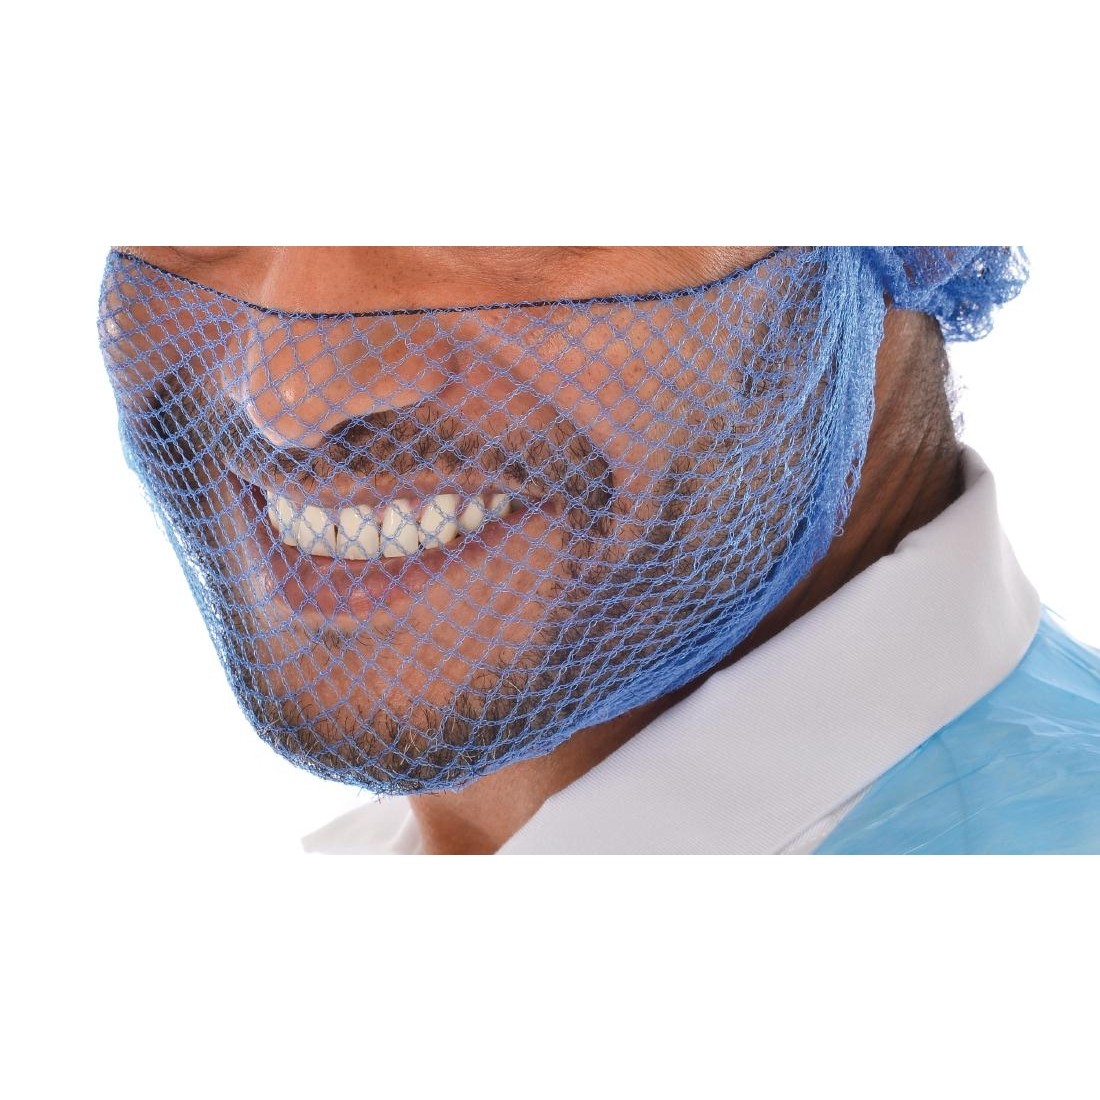 Close Mesh Beard Nets